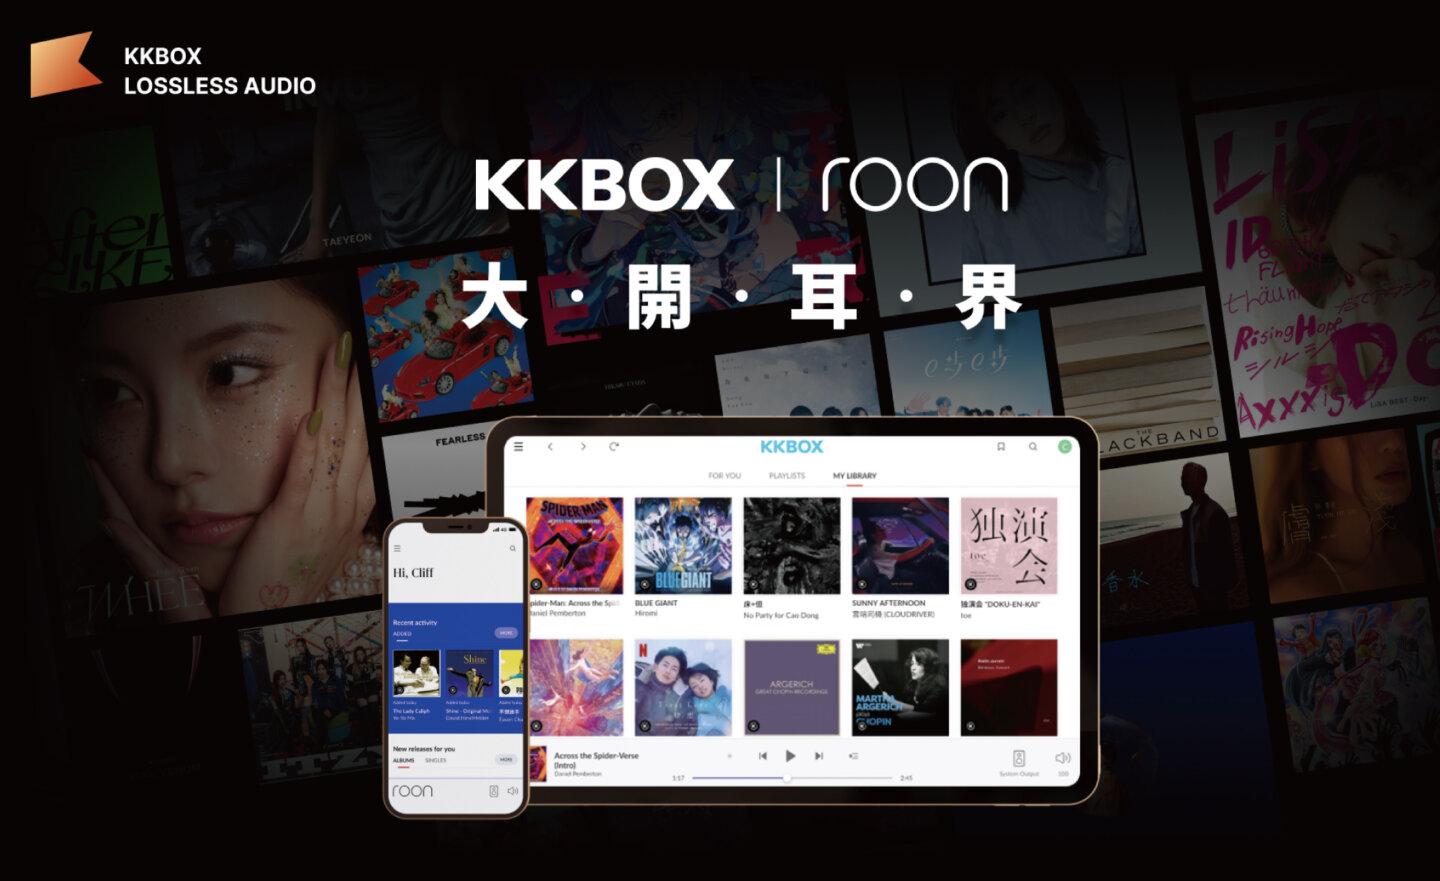 KKBOX 支援音樂串流軟體 Roon！